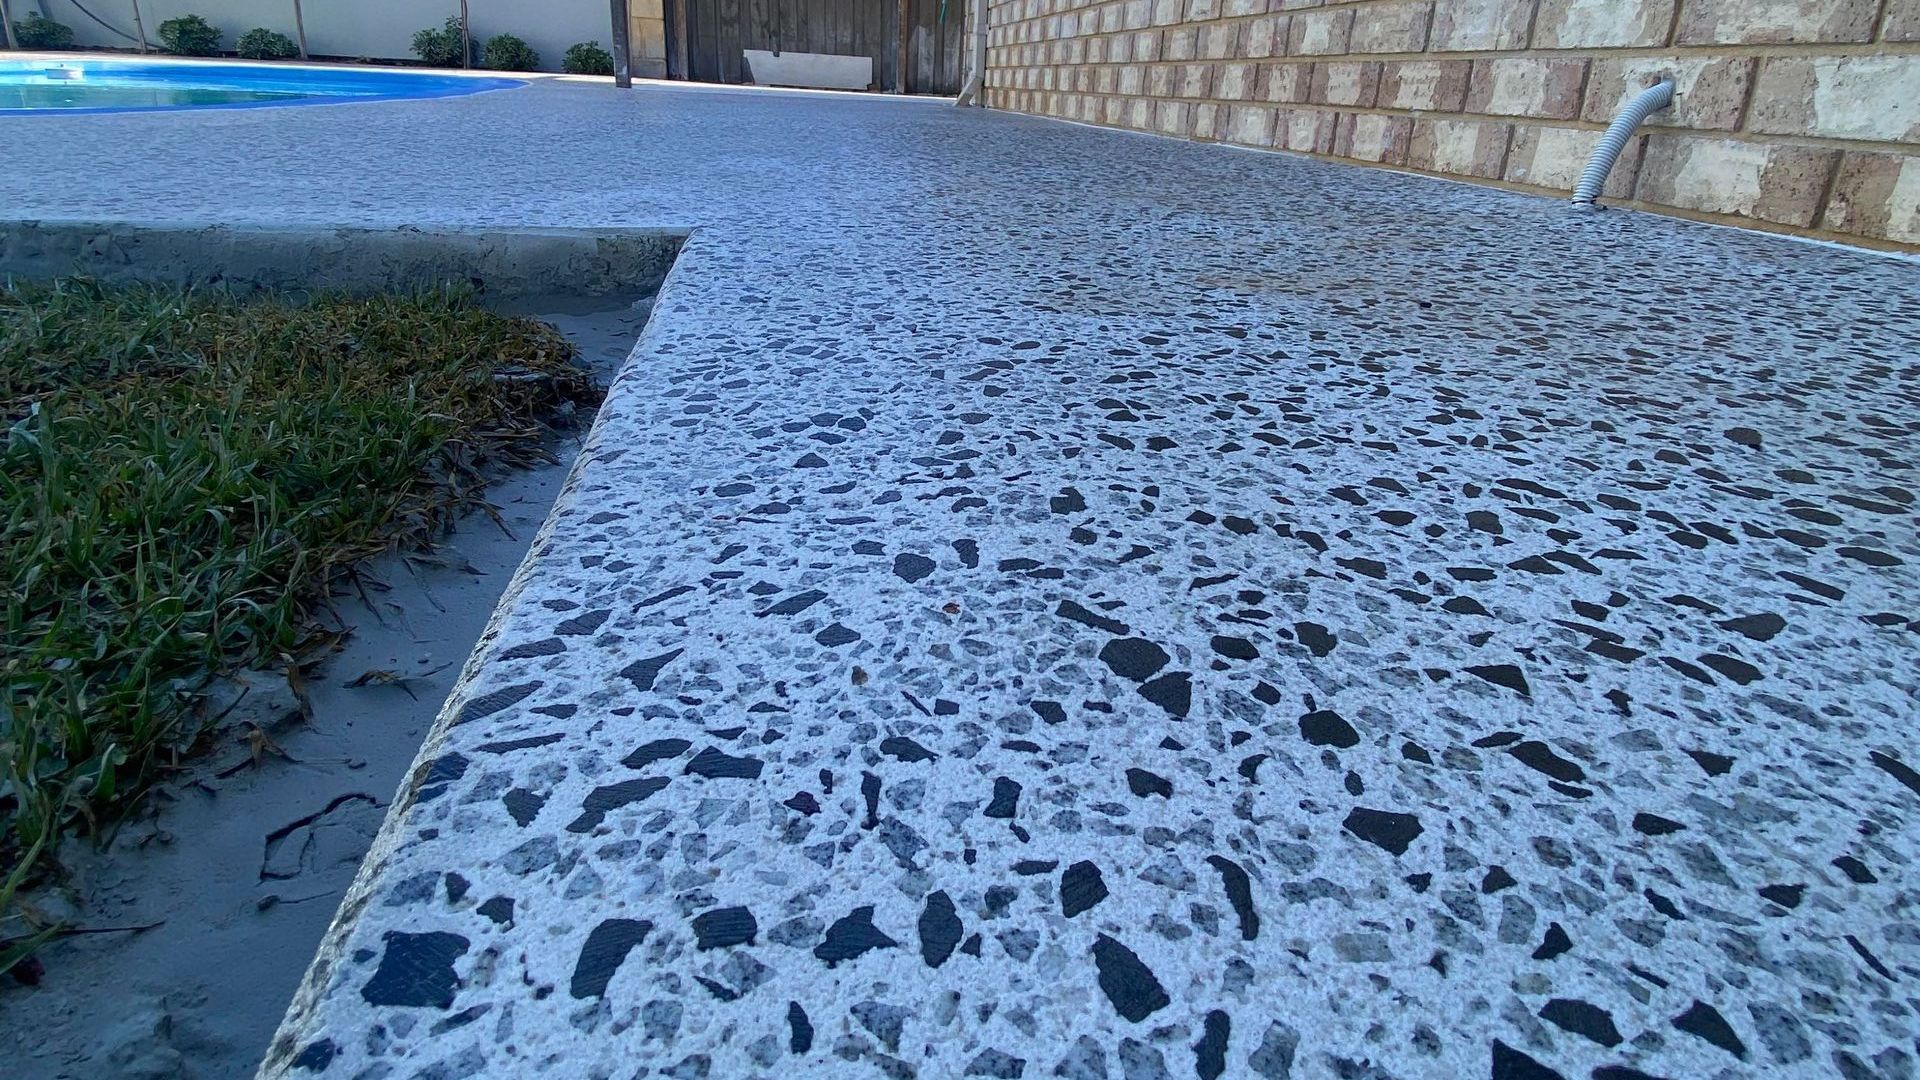 Honed Concrete under alfresco